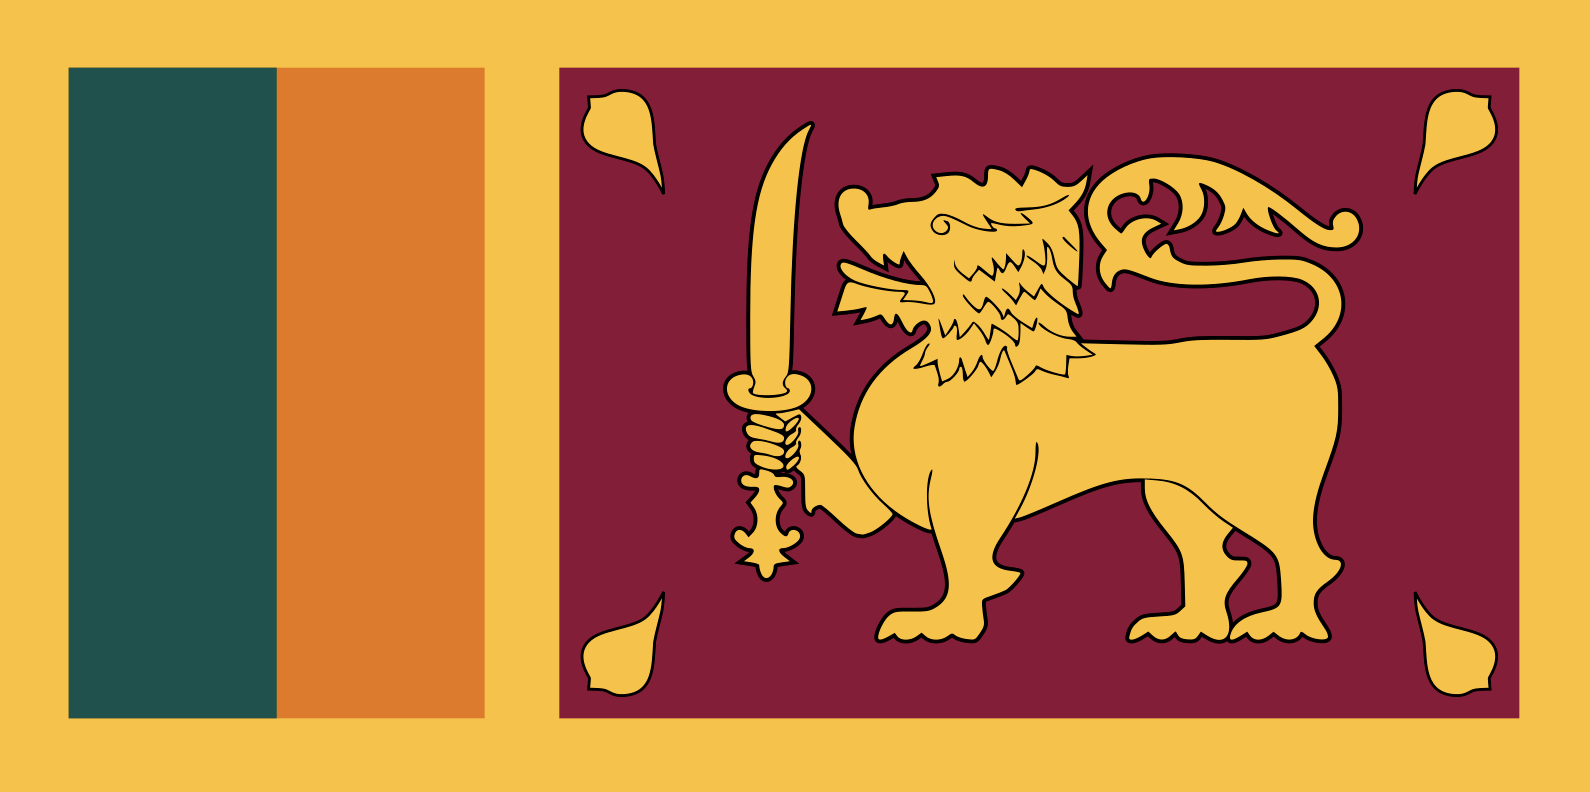 Sri Lanka - proxy